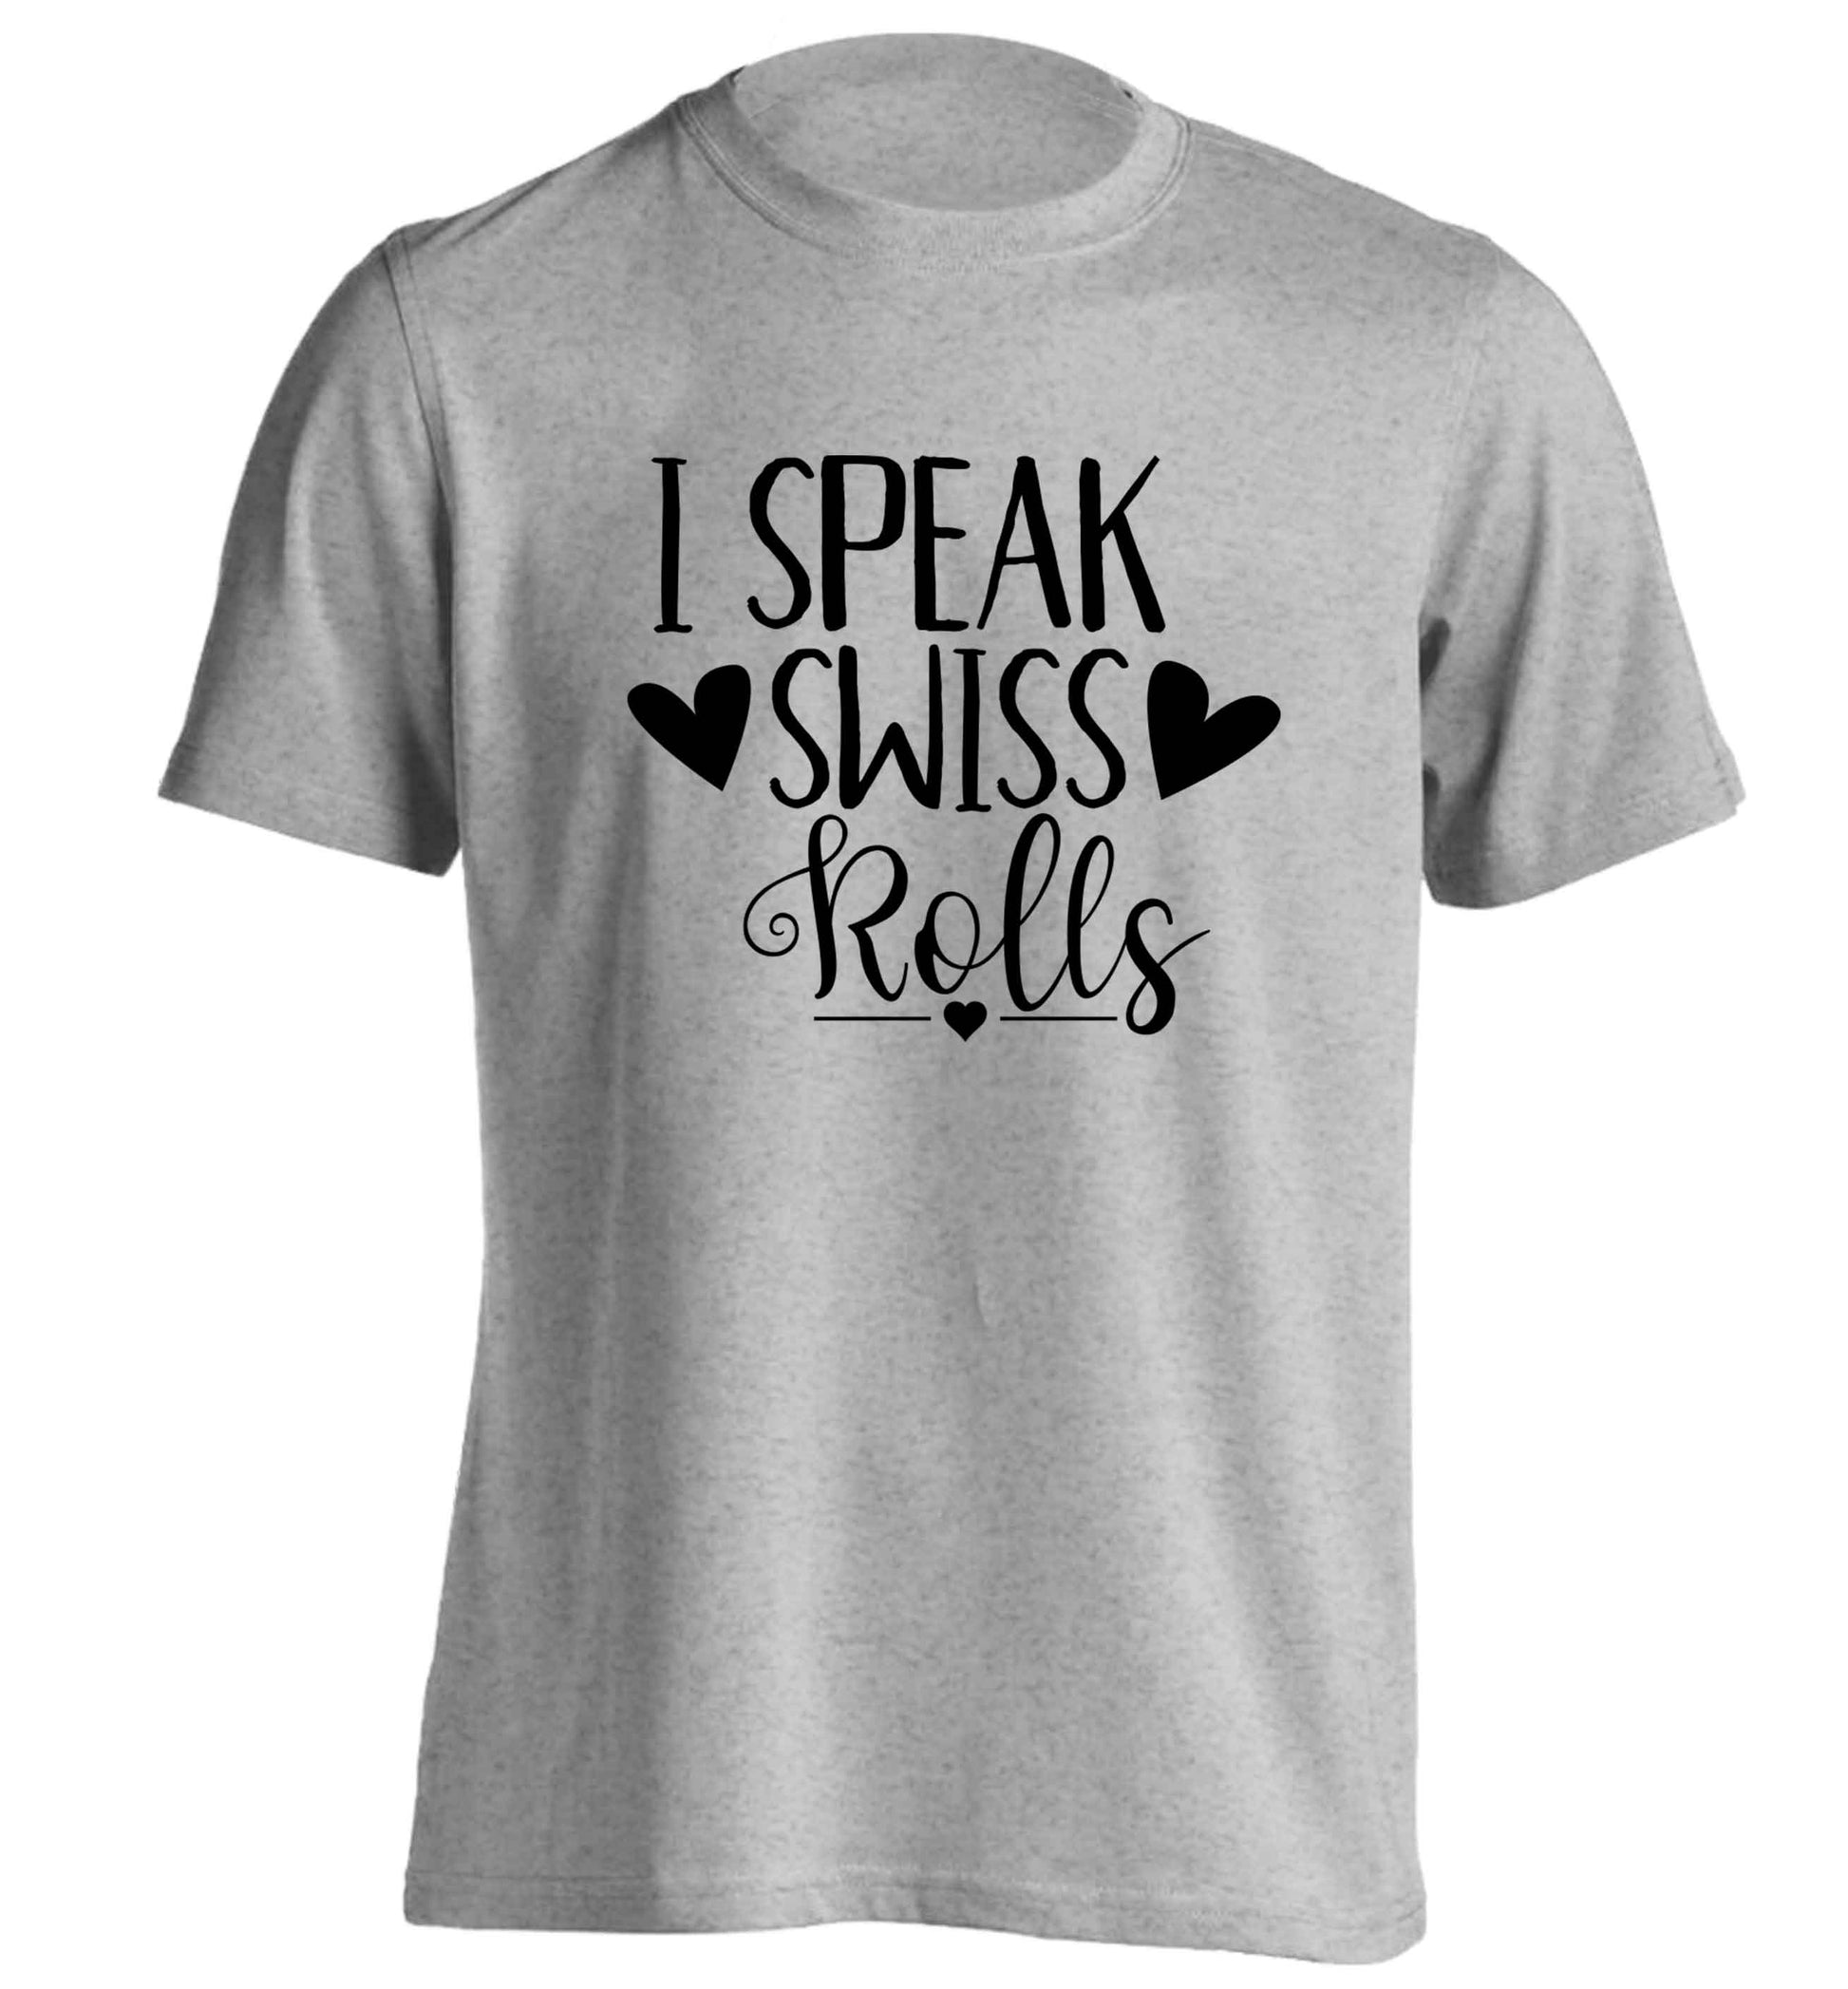 I speak swiss..rolls adults unisex grey Tshirt 2XL